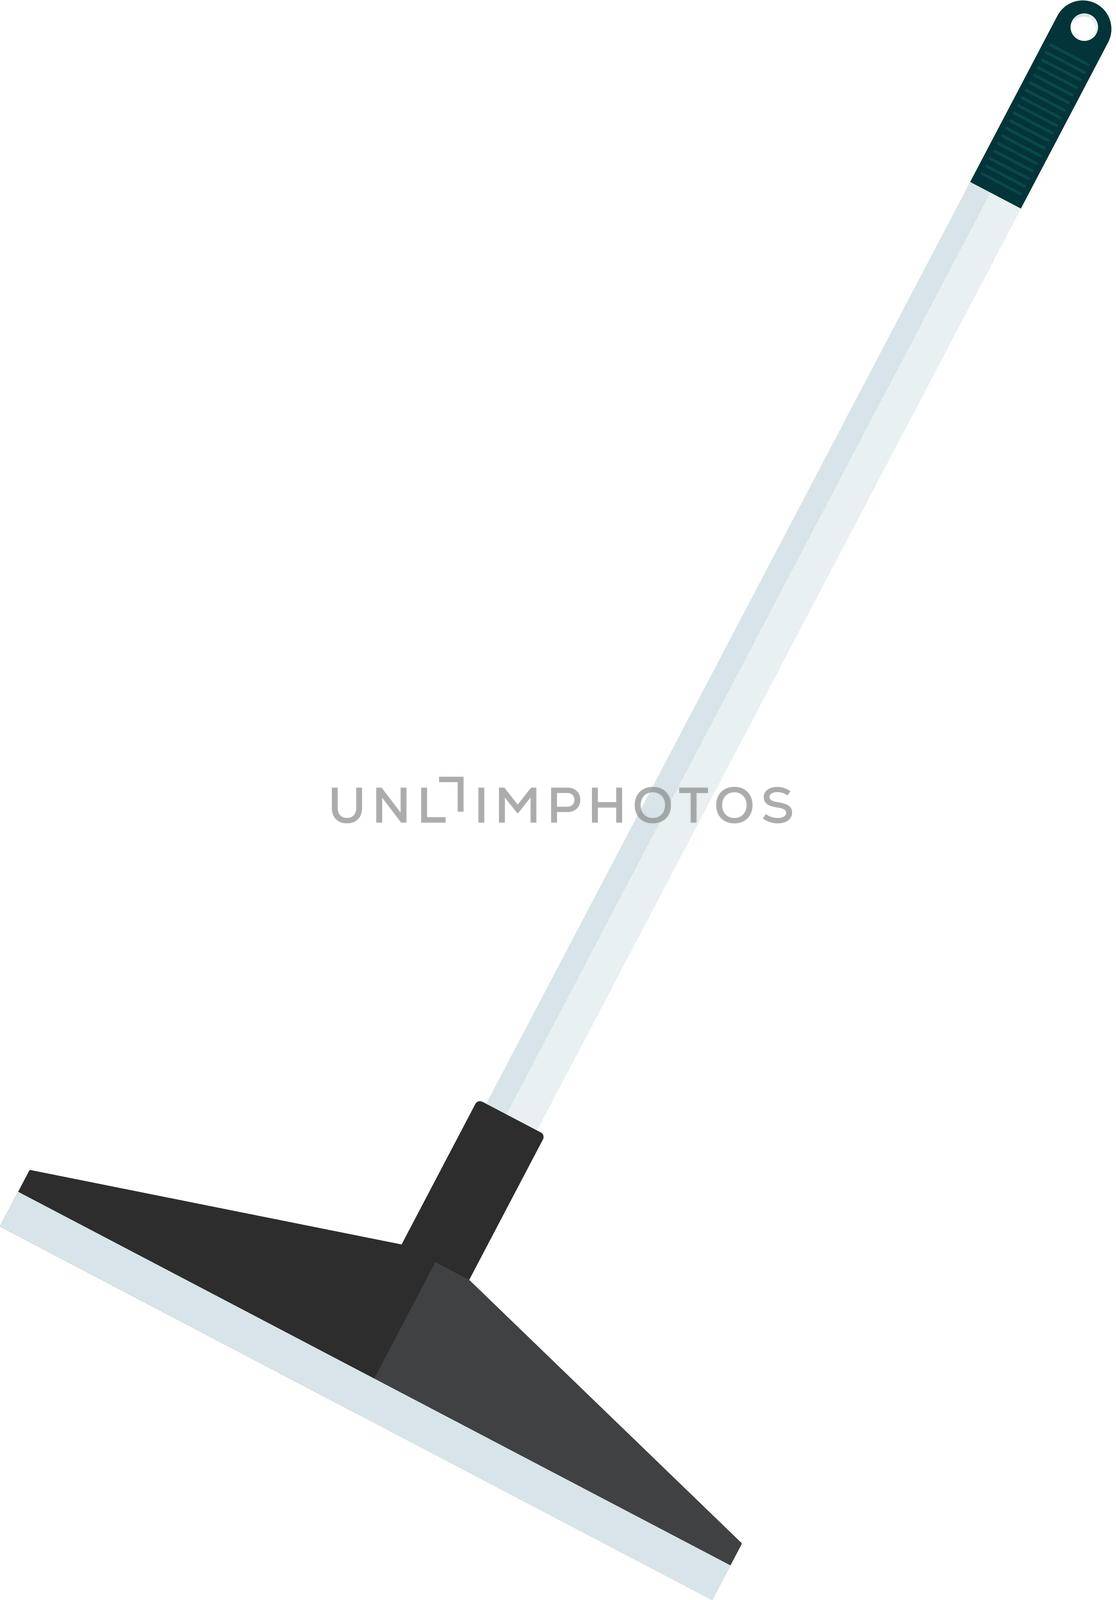 Glass wiper, illustration, vector on white background. by Morphart